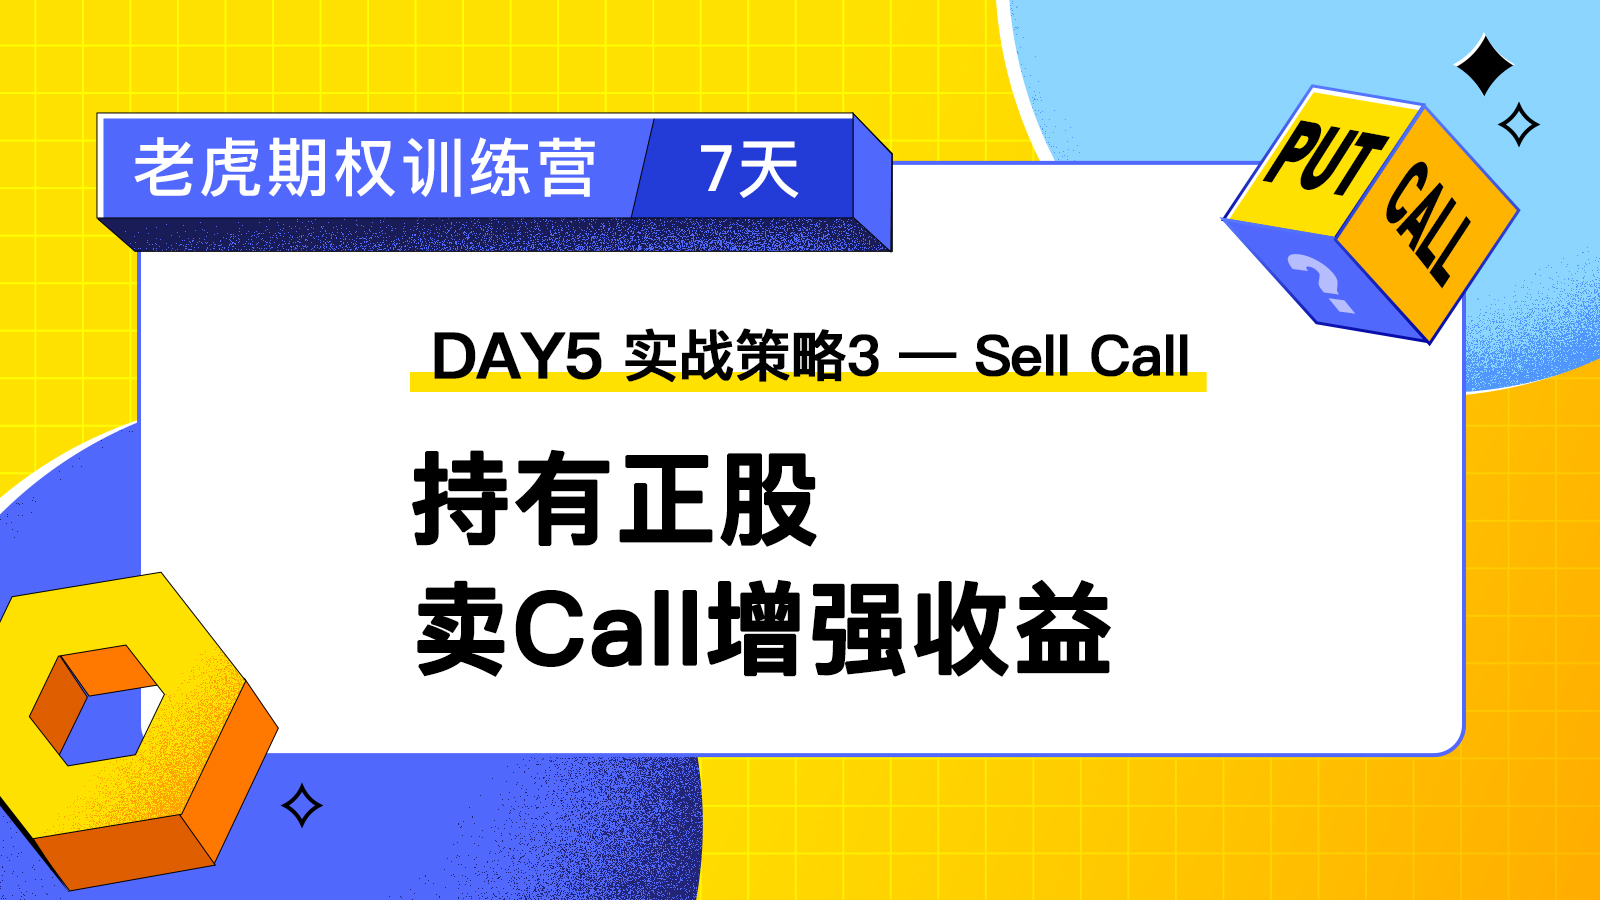 DAY5: 实战策略3:  持有正股，卖Call增强收益(Sell Call)